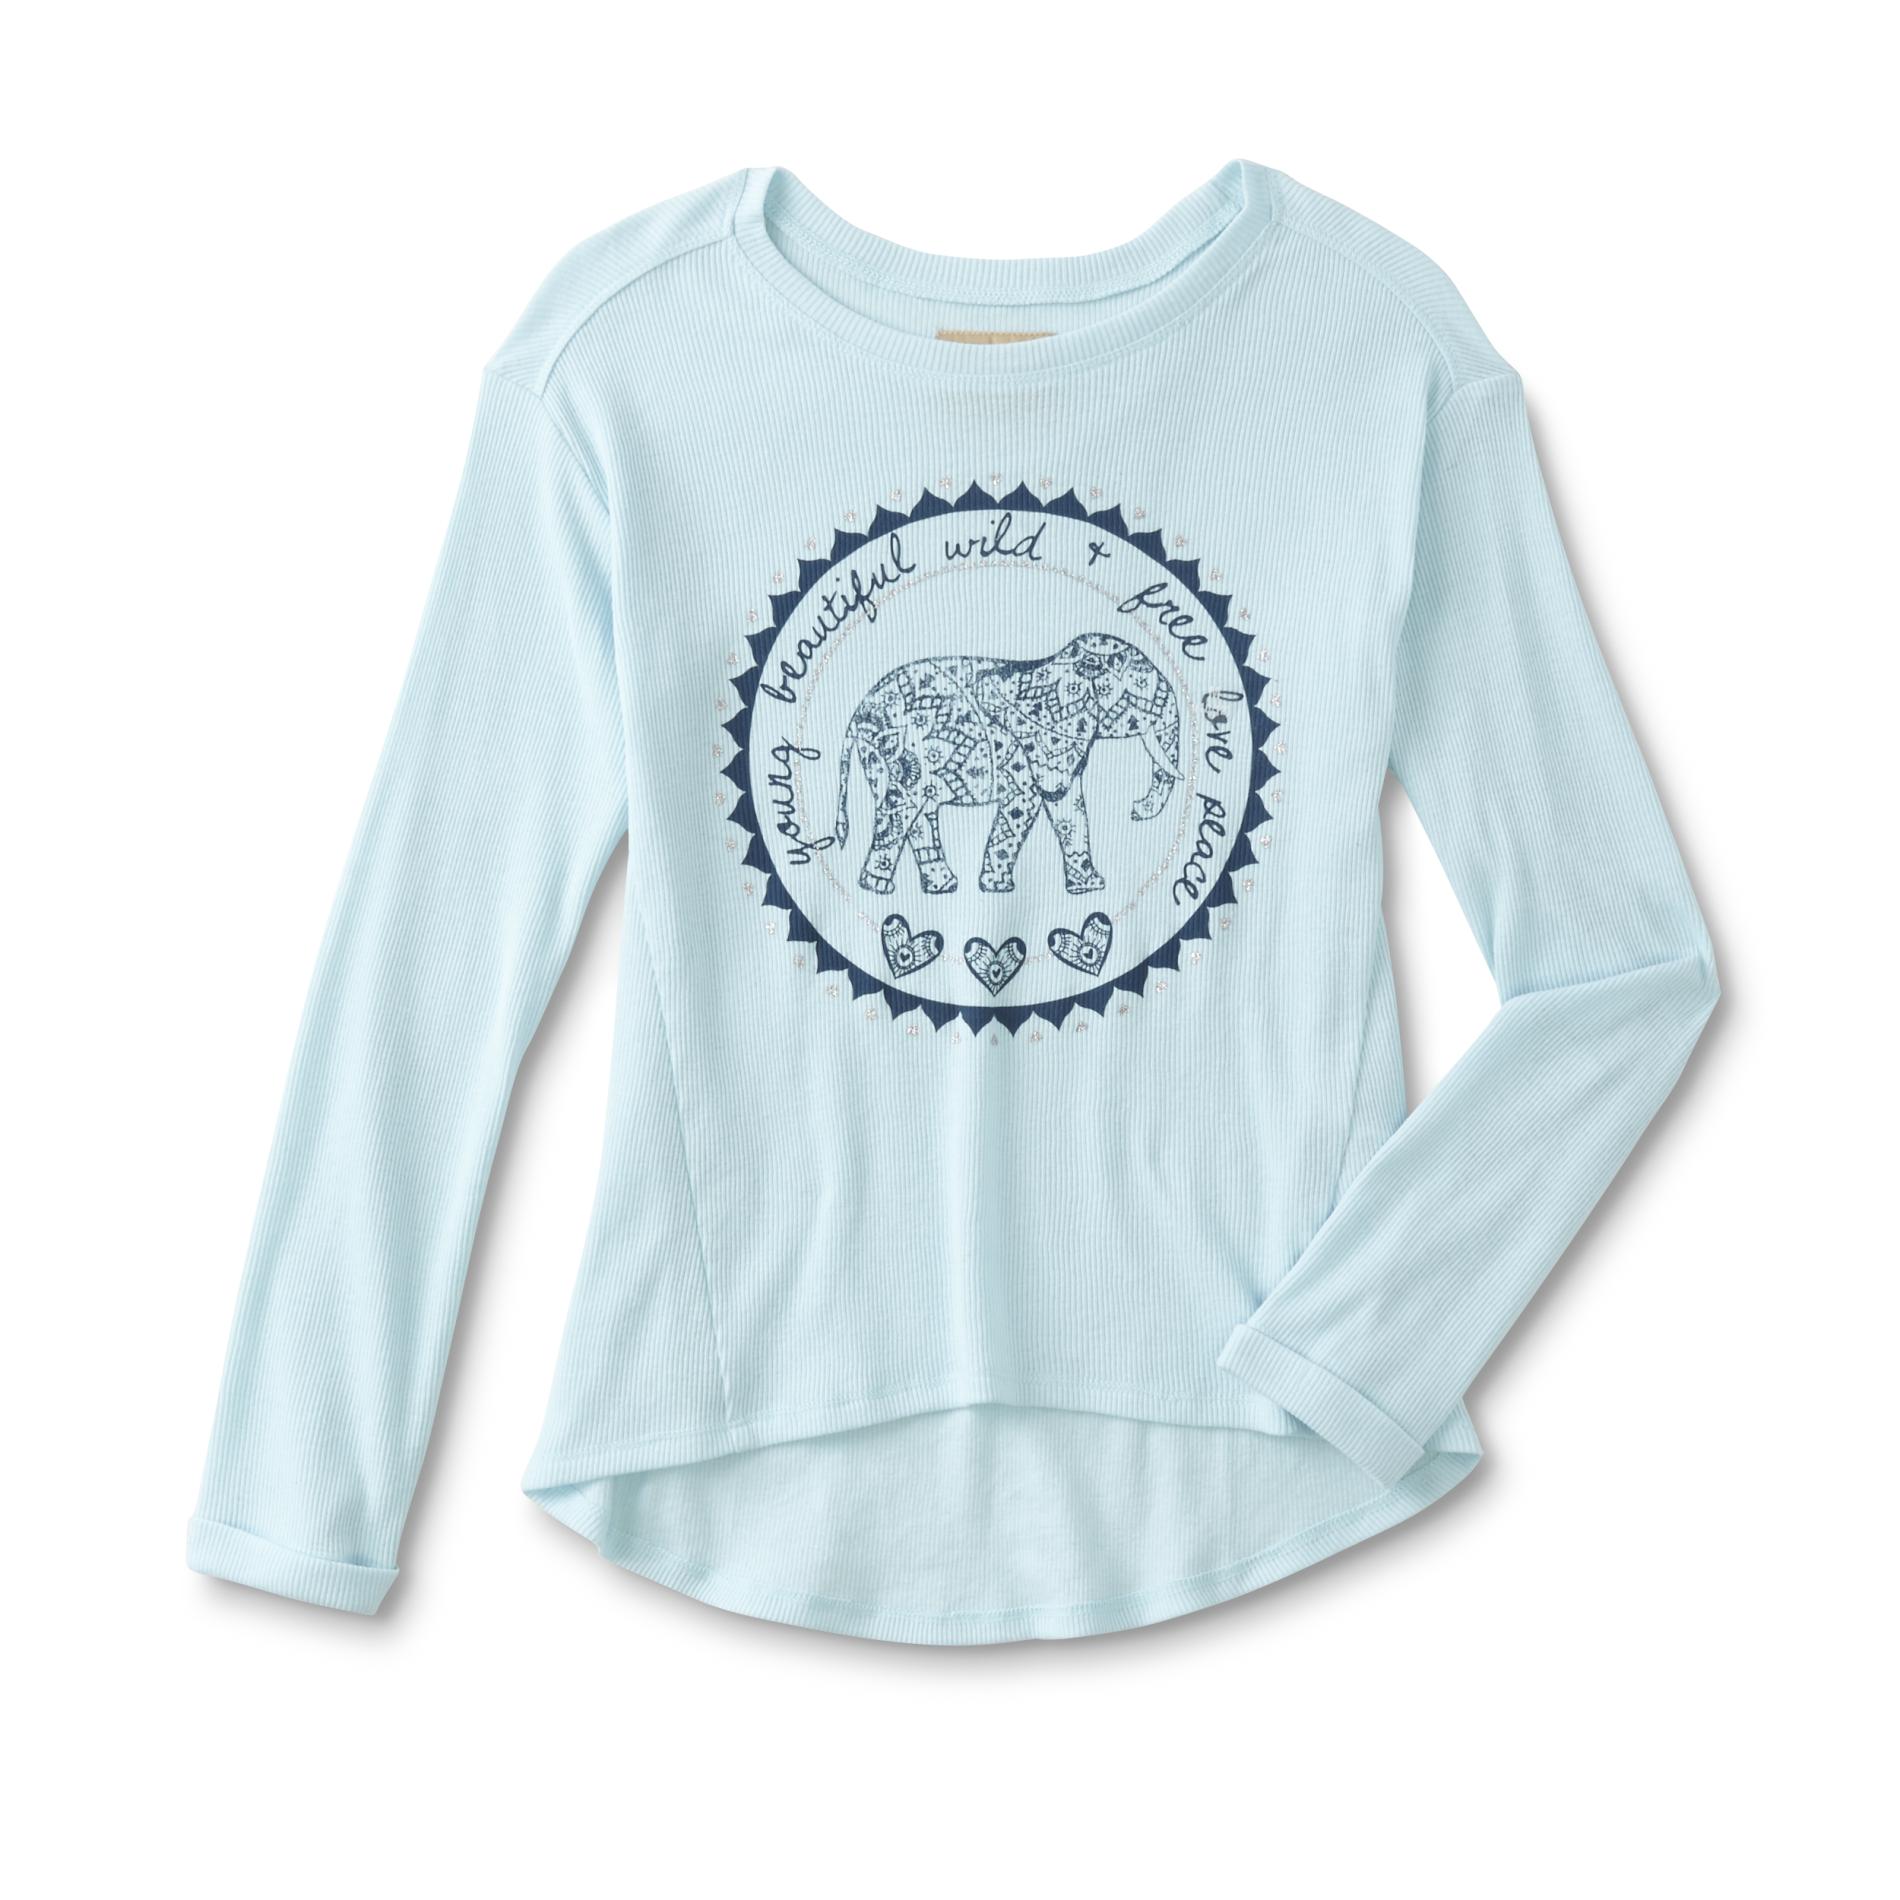 ROEBUCK & CO R1893 Girls' Long-Sleeve Graphic Top - Elephant